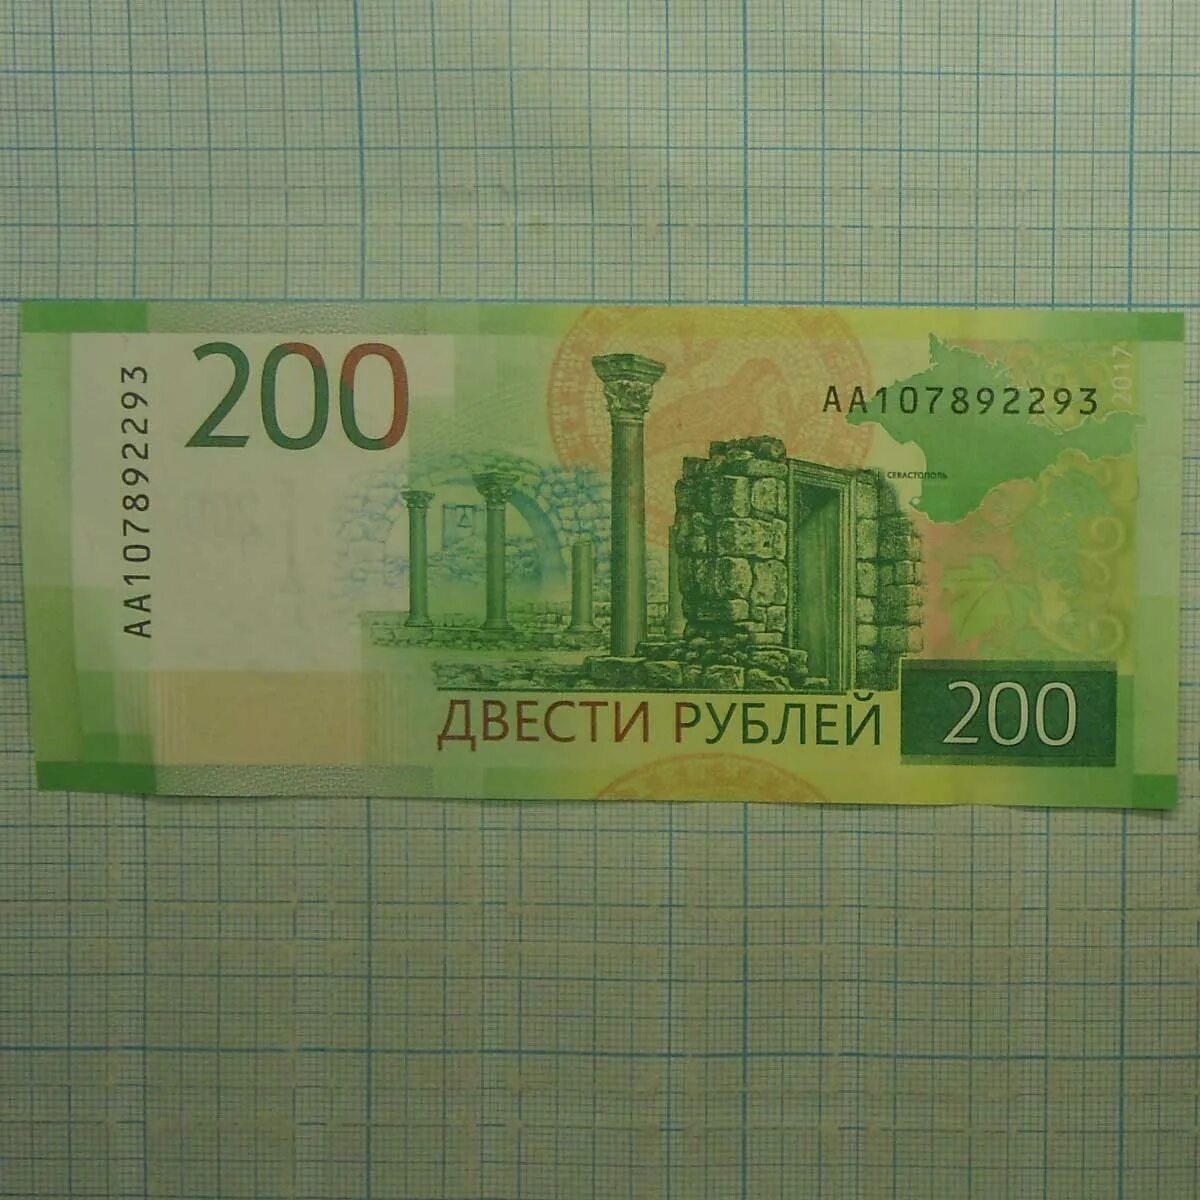 200 рублей продажа. 200 Рублей. Купюра 200 рублей. 200 Рублей банкнота. 200 Рублей 2017.